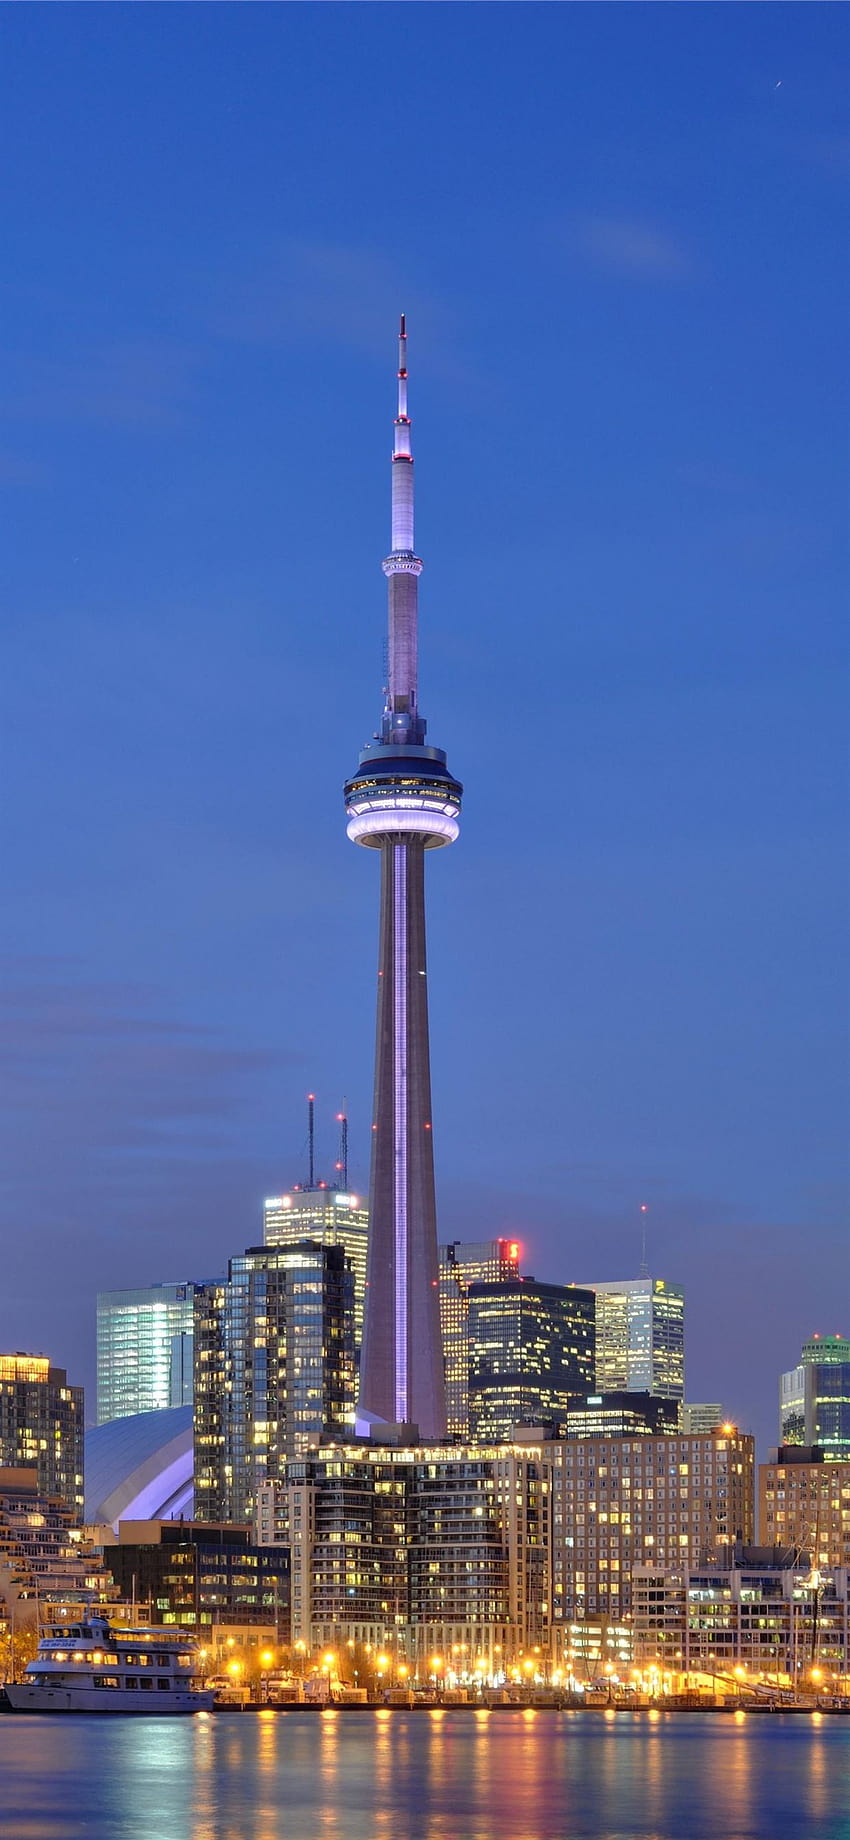 Toronto Photos, Download The BEST Free Toronto Stock Photos & HD Images